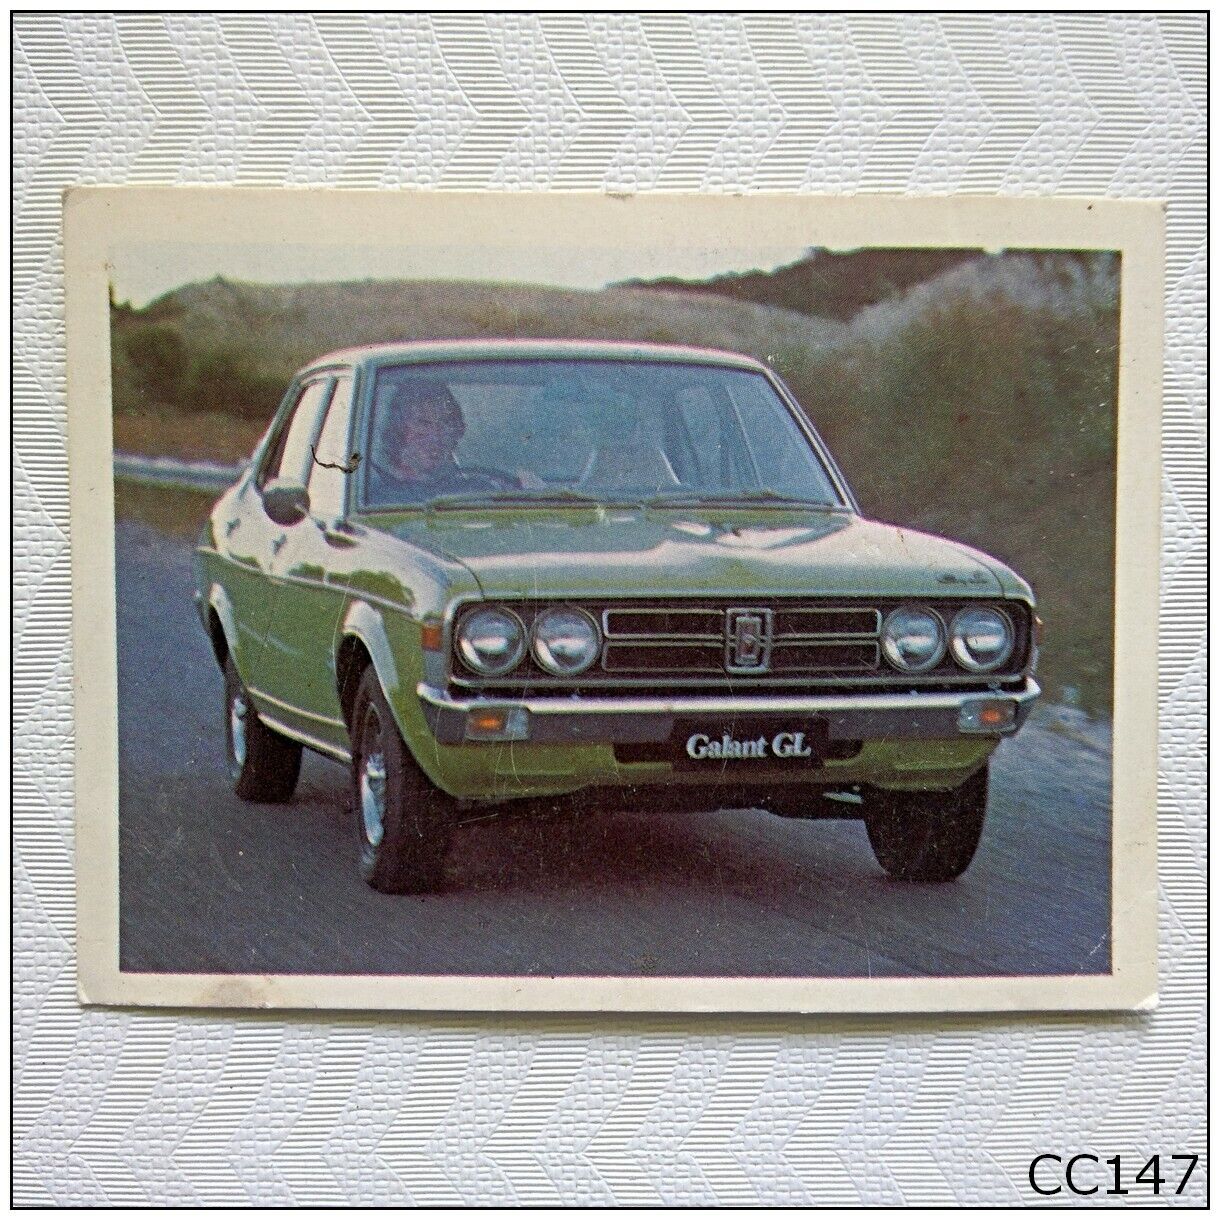 Weet-Bix Cavalcade of Cars #9 Chrysler Galant GL Cereal Card (B) (CC147)